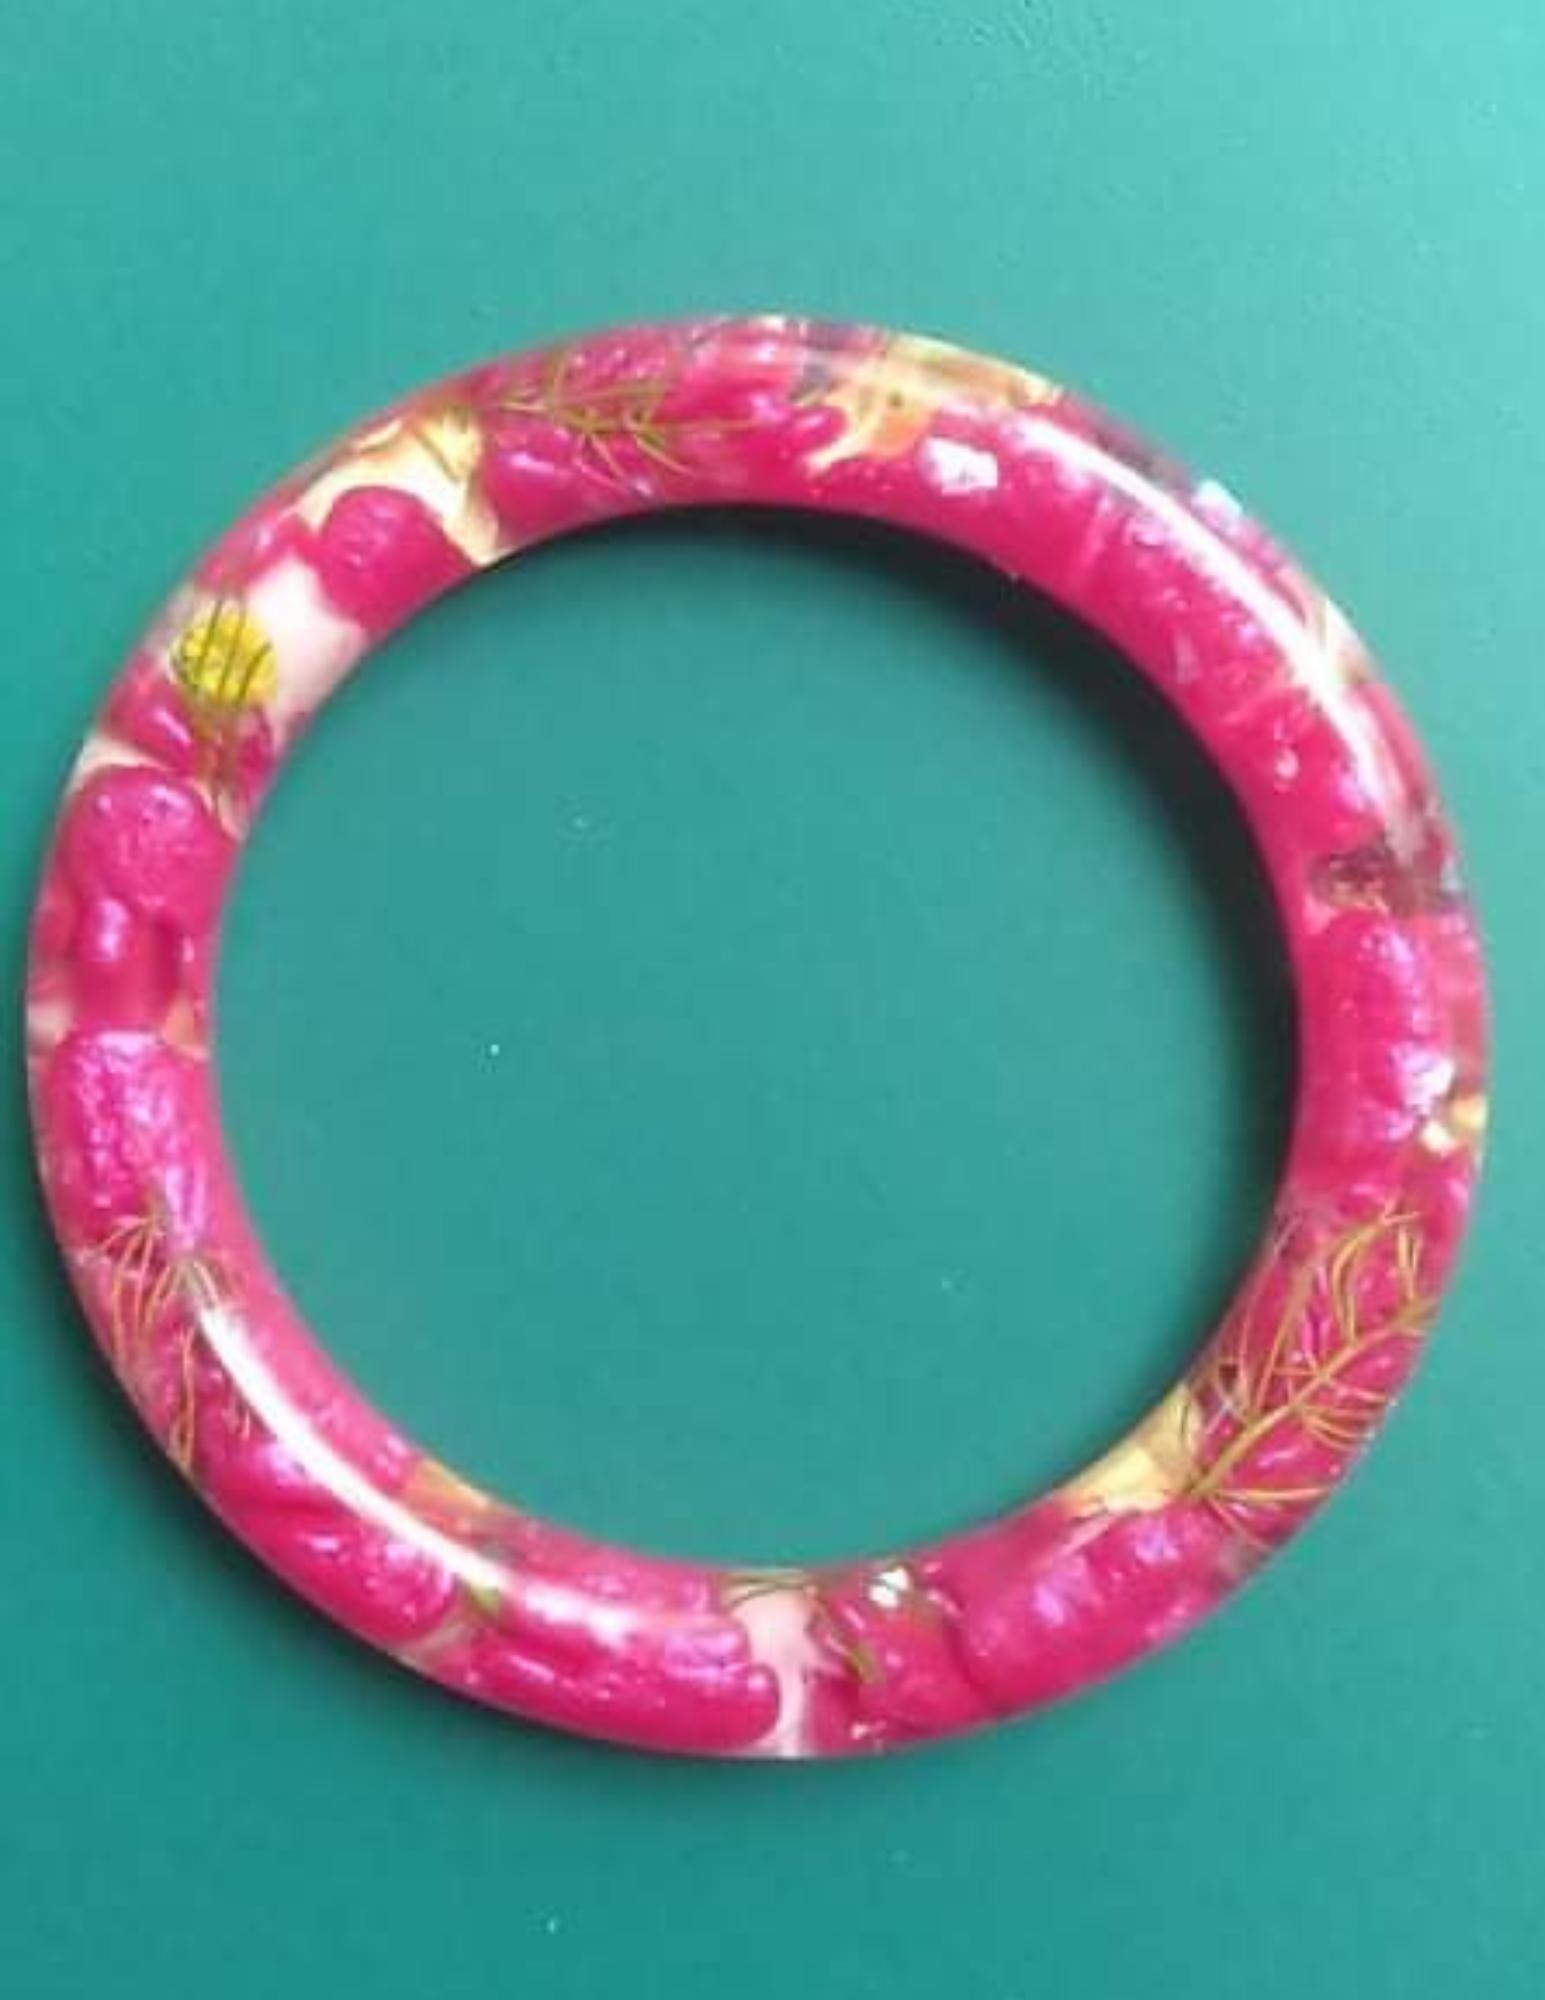 resin bracelet with dried flowers inside